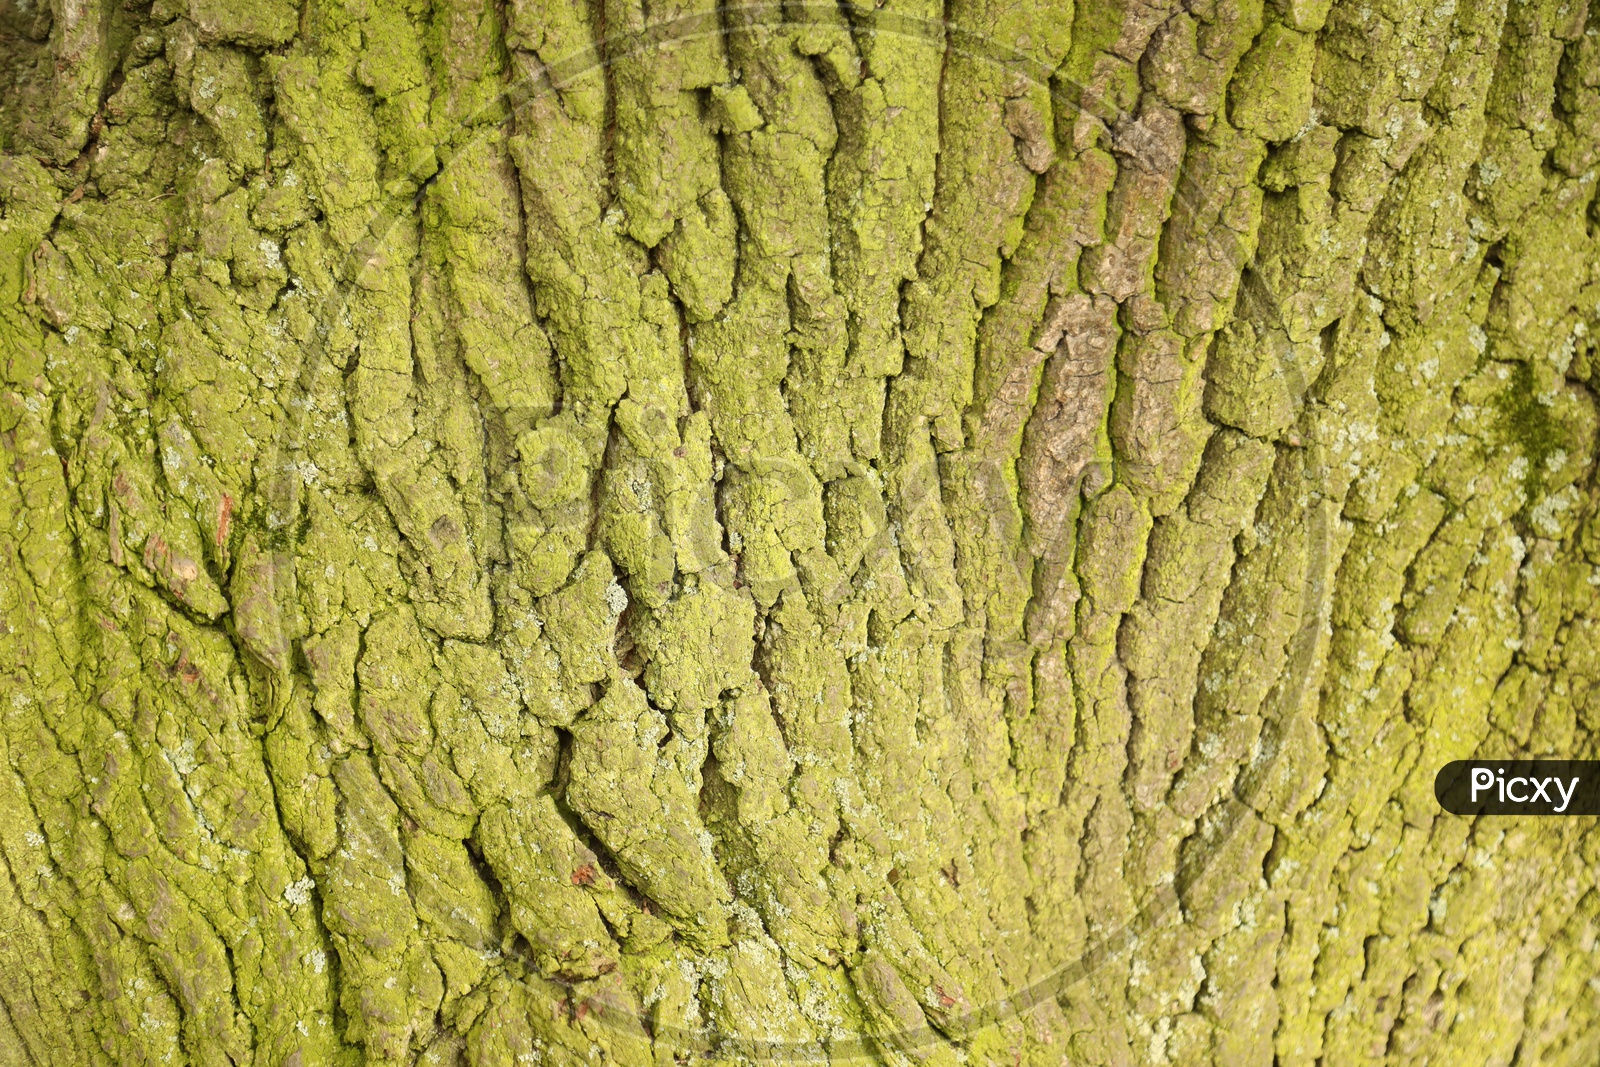 Tree Bark With Texture Representation